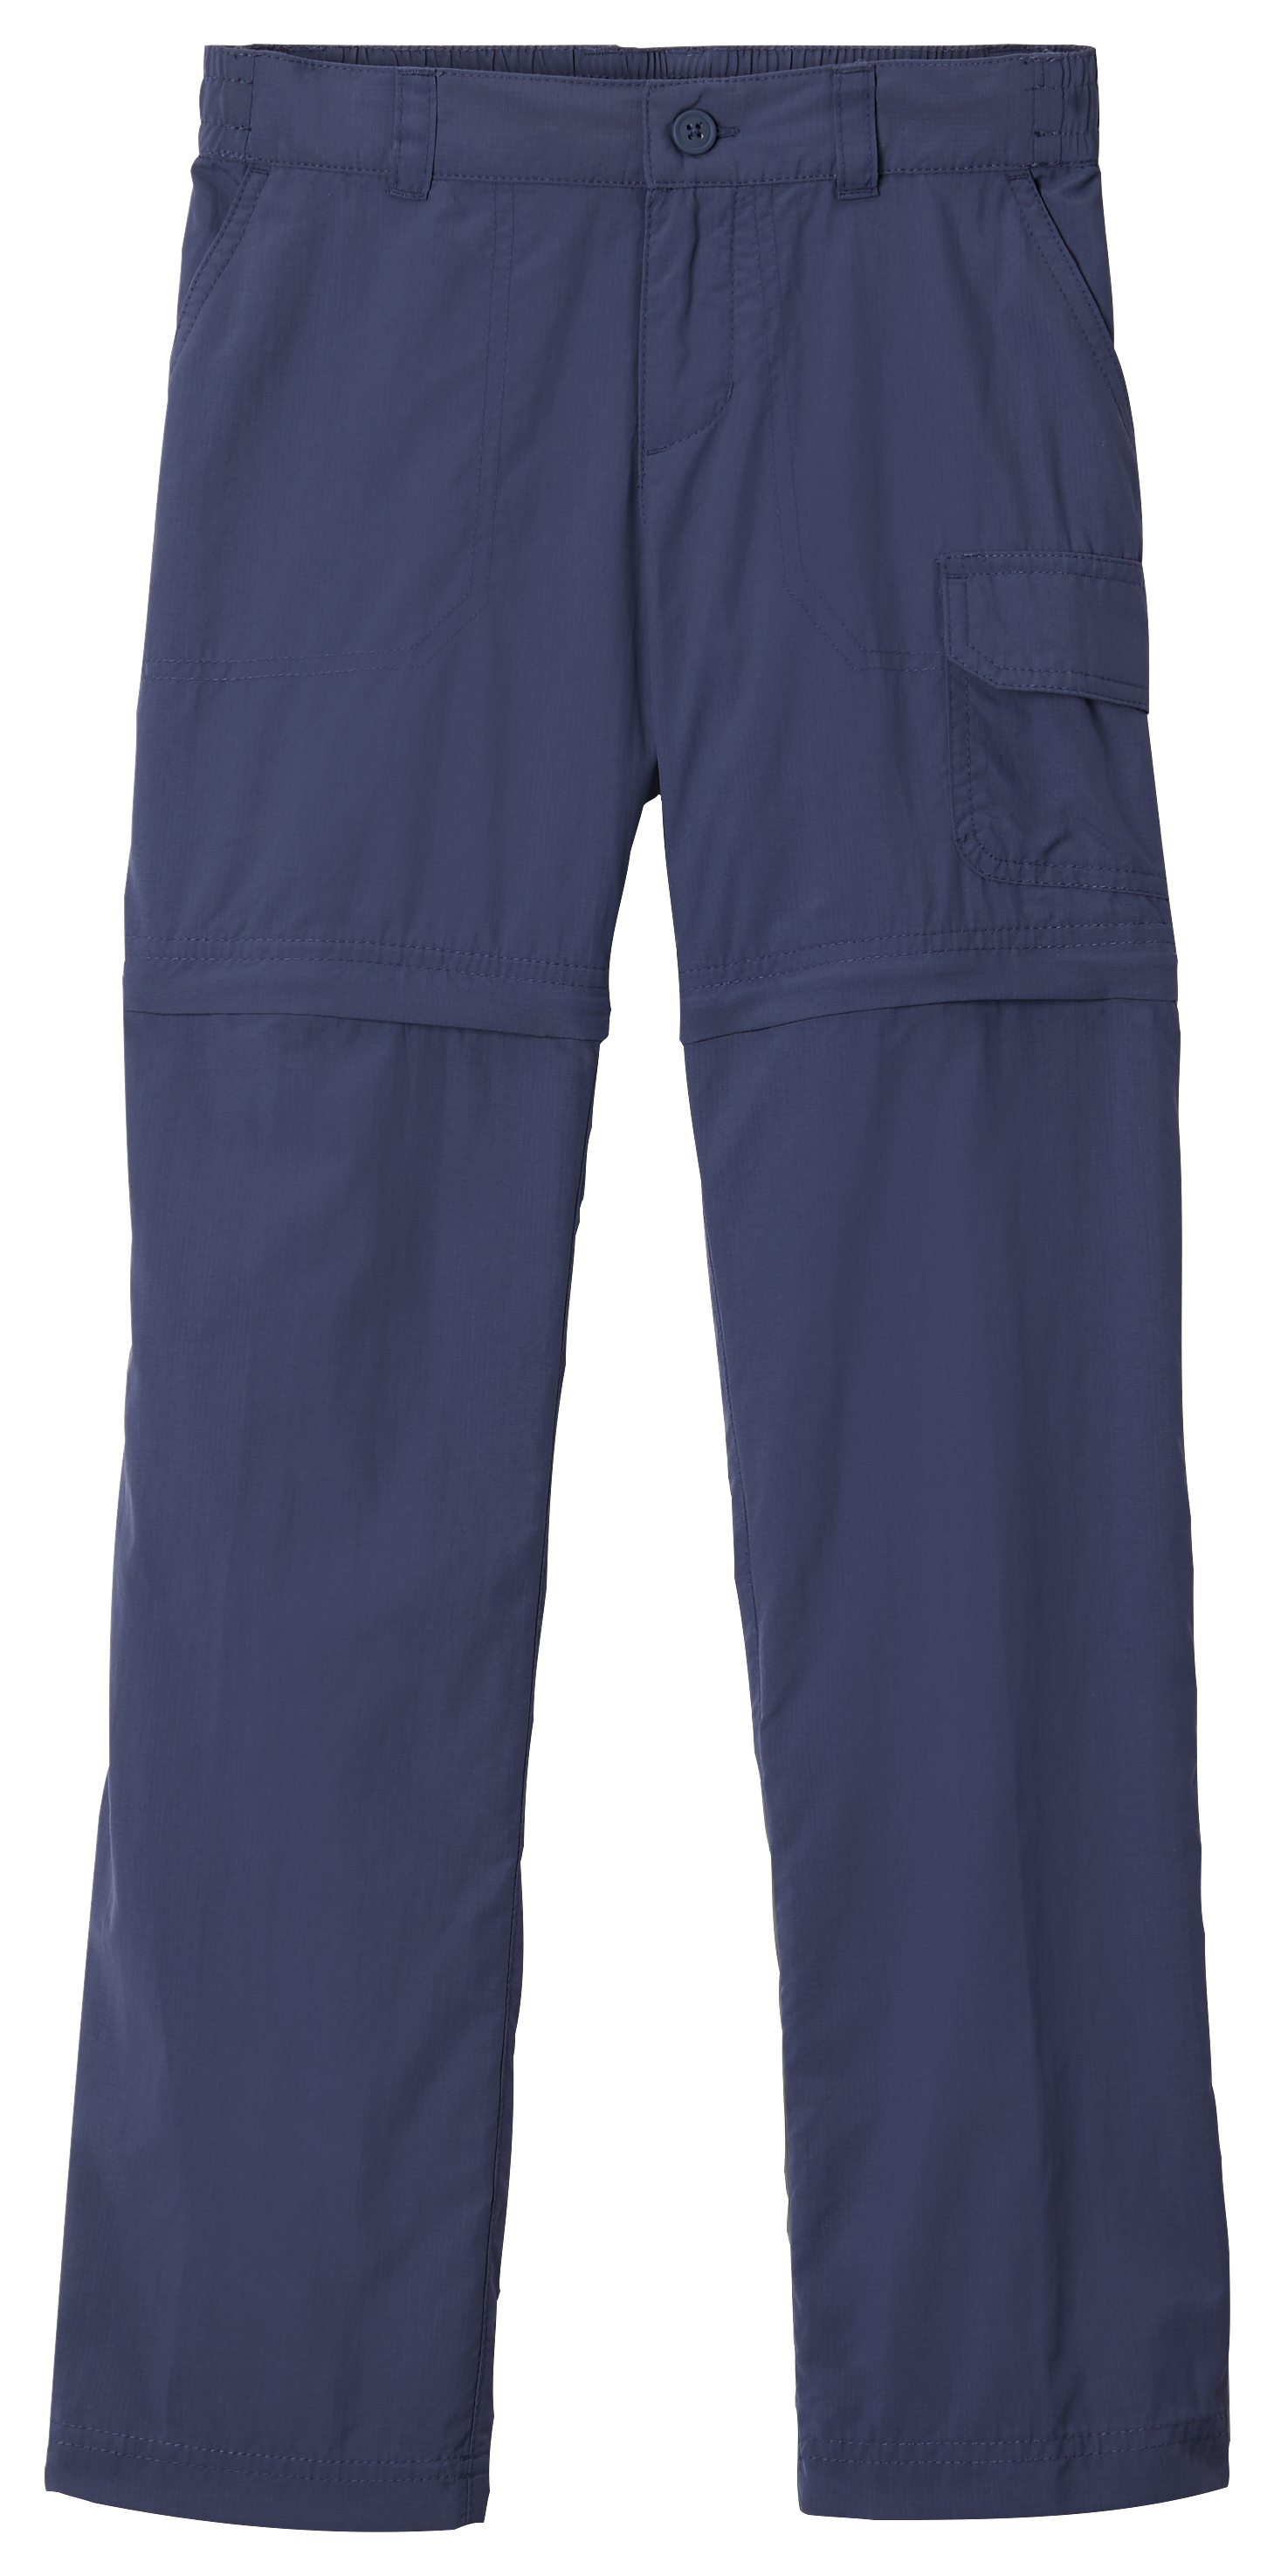 Columbia Silver Ridge IV Convertible Pants for Girls